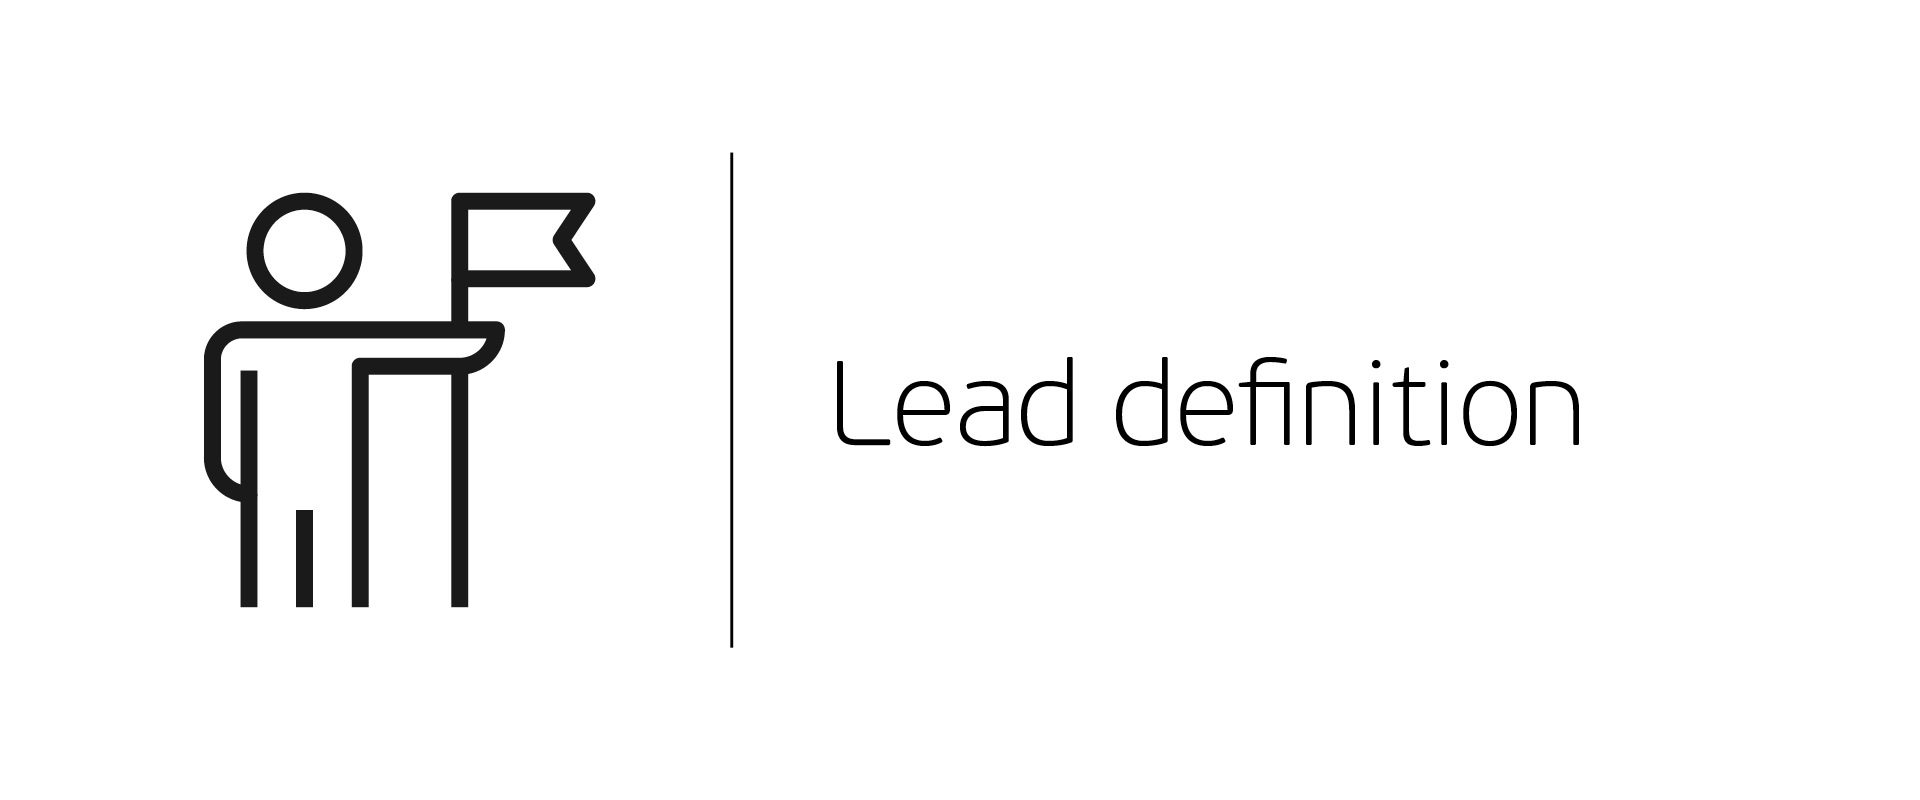 Lead definition